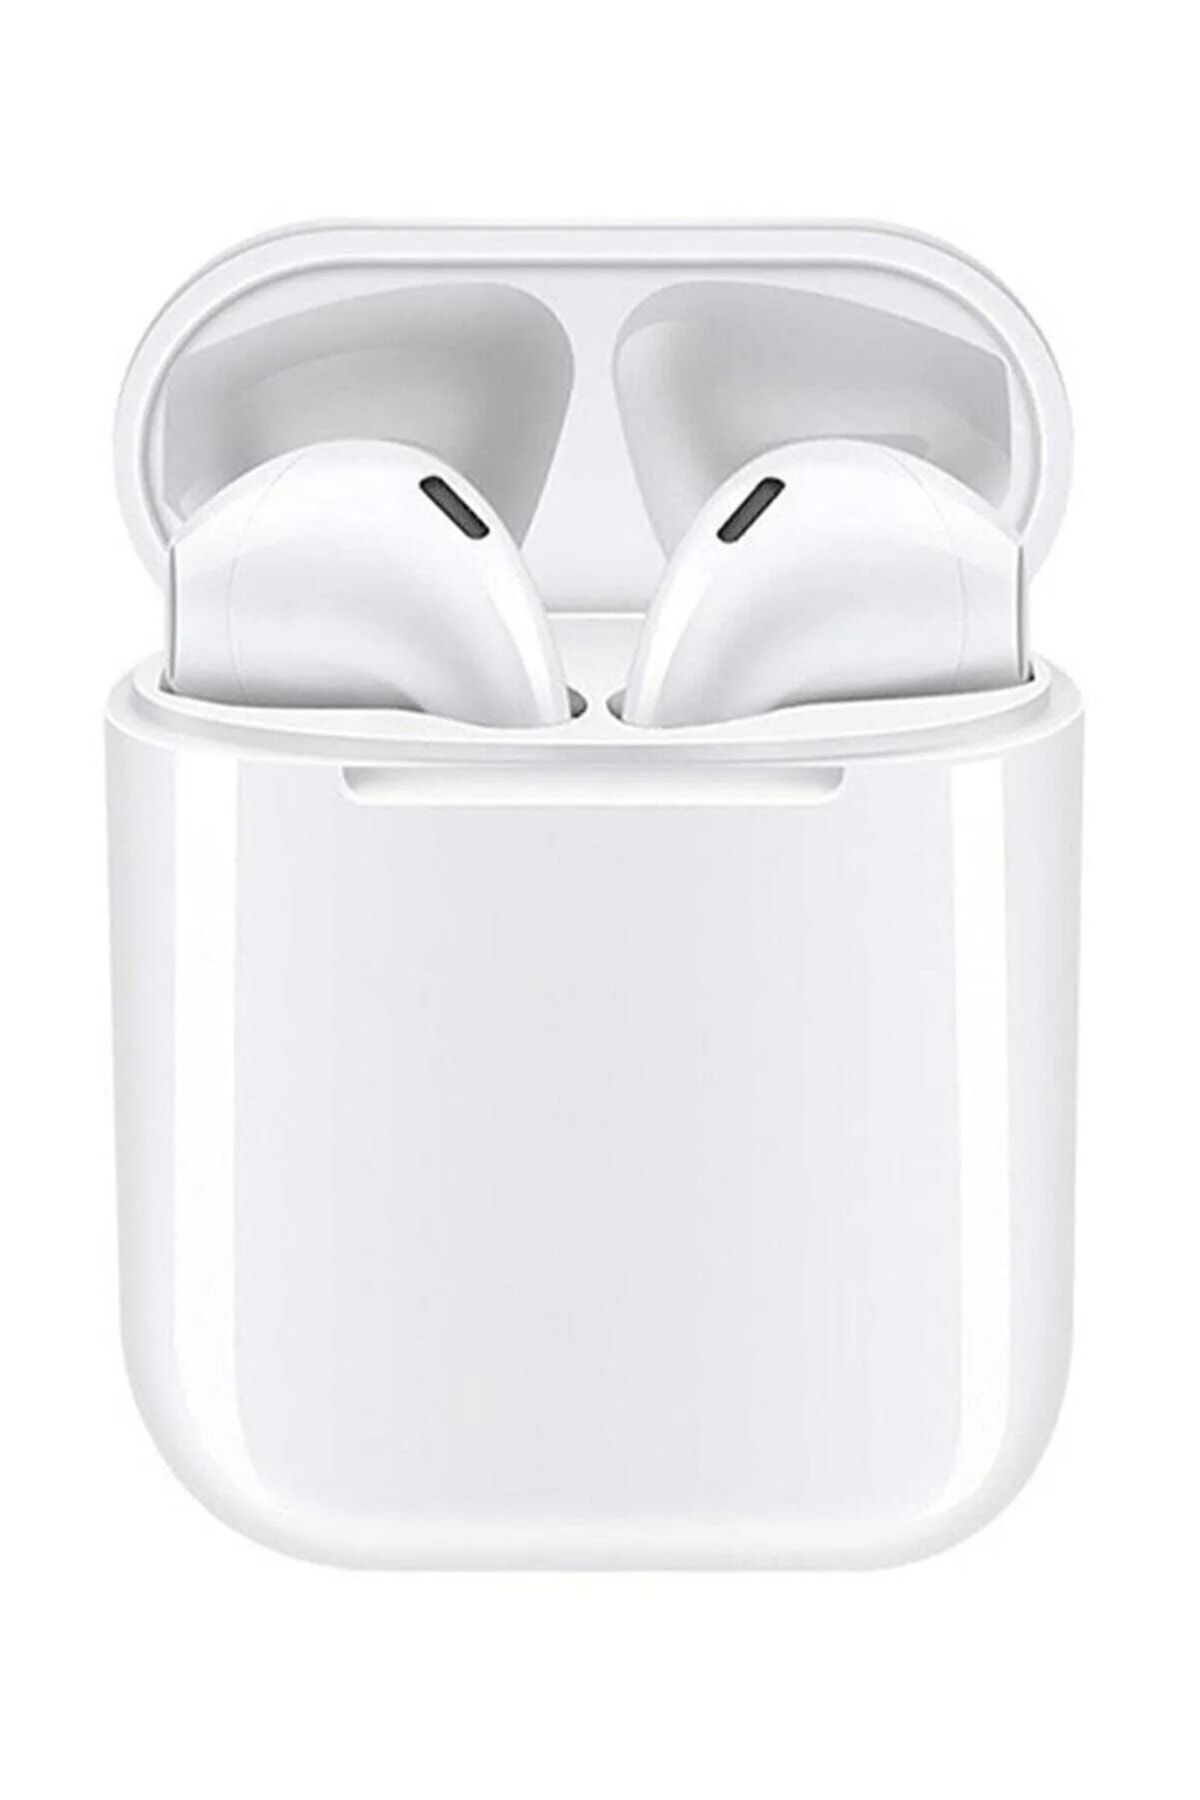 Torima İ12 inPods Bluetooth Kulaklık Pop up 5.0 Stereo Beyaz